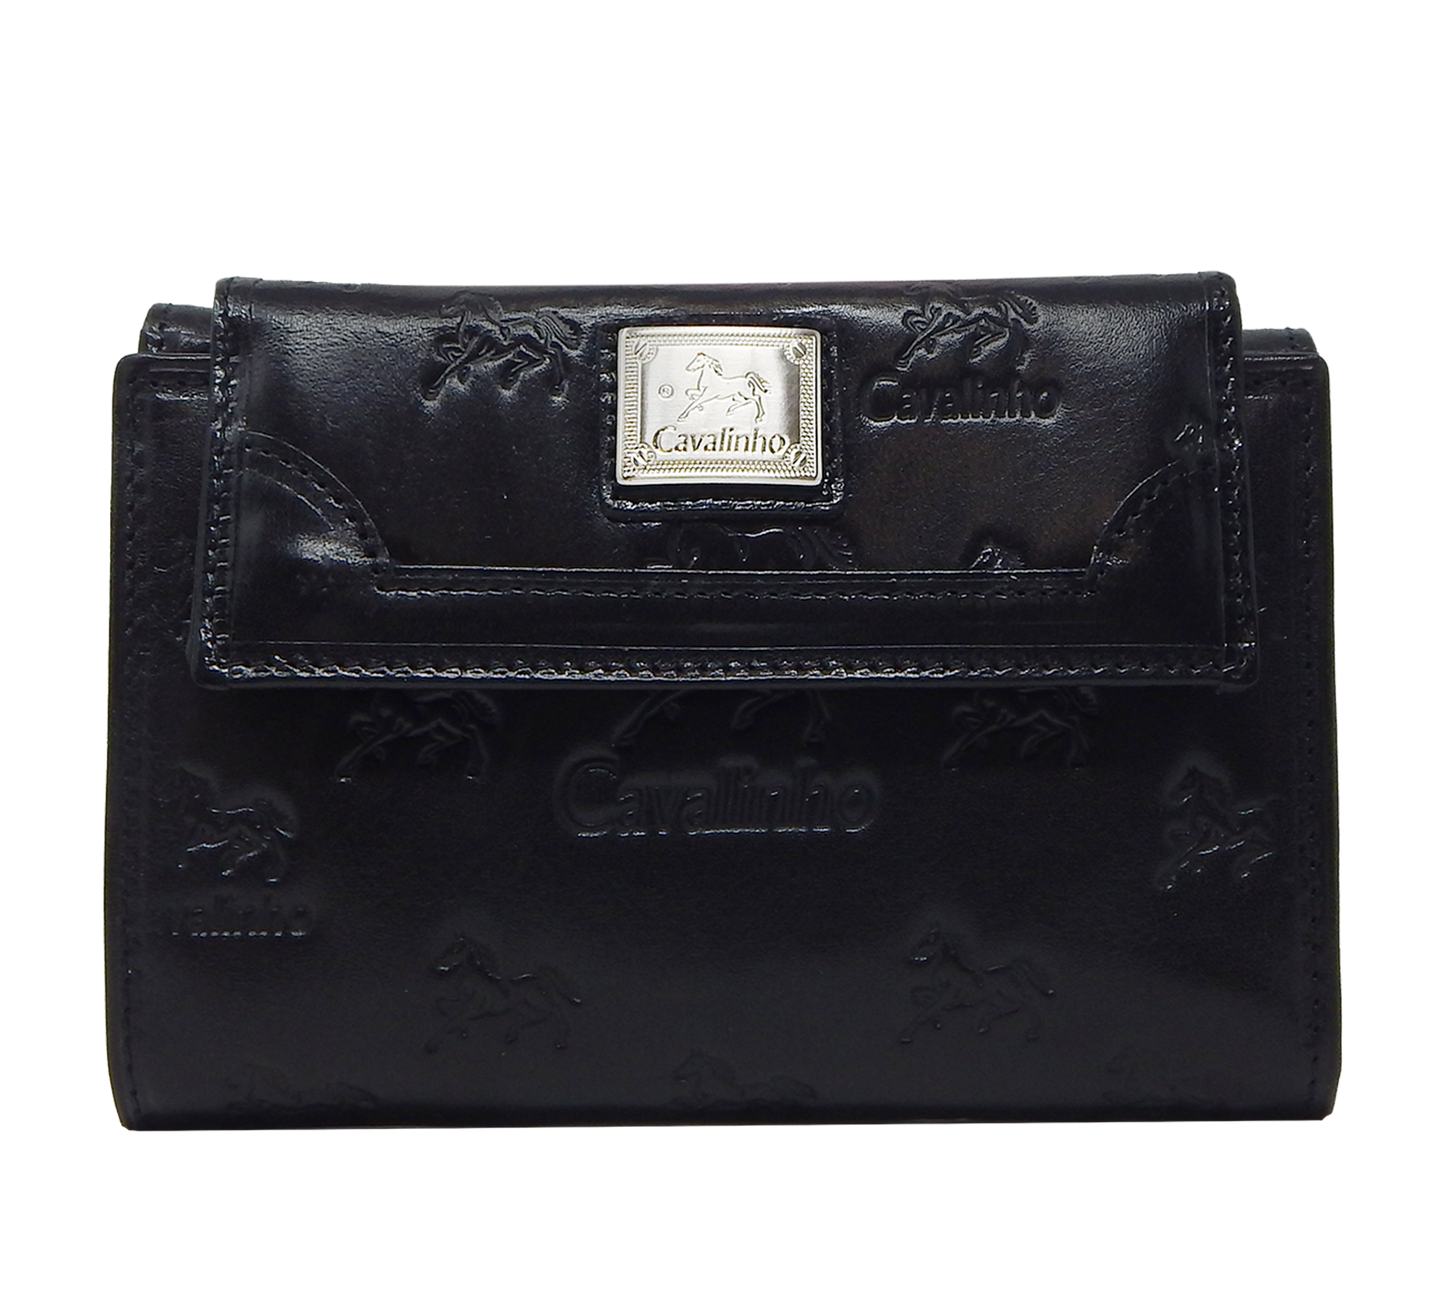 Cavalinho Cavalo Lusitano Leather Wallet - Black - 28090204_01_f_2